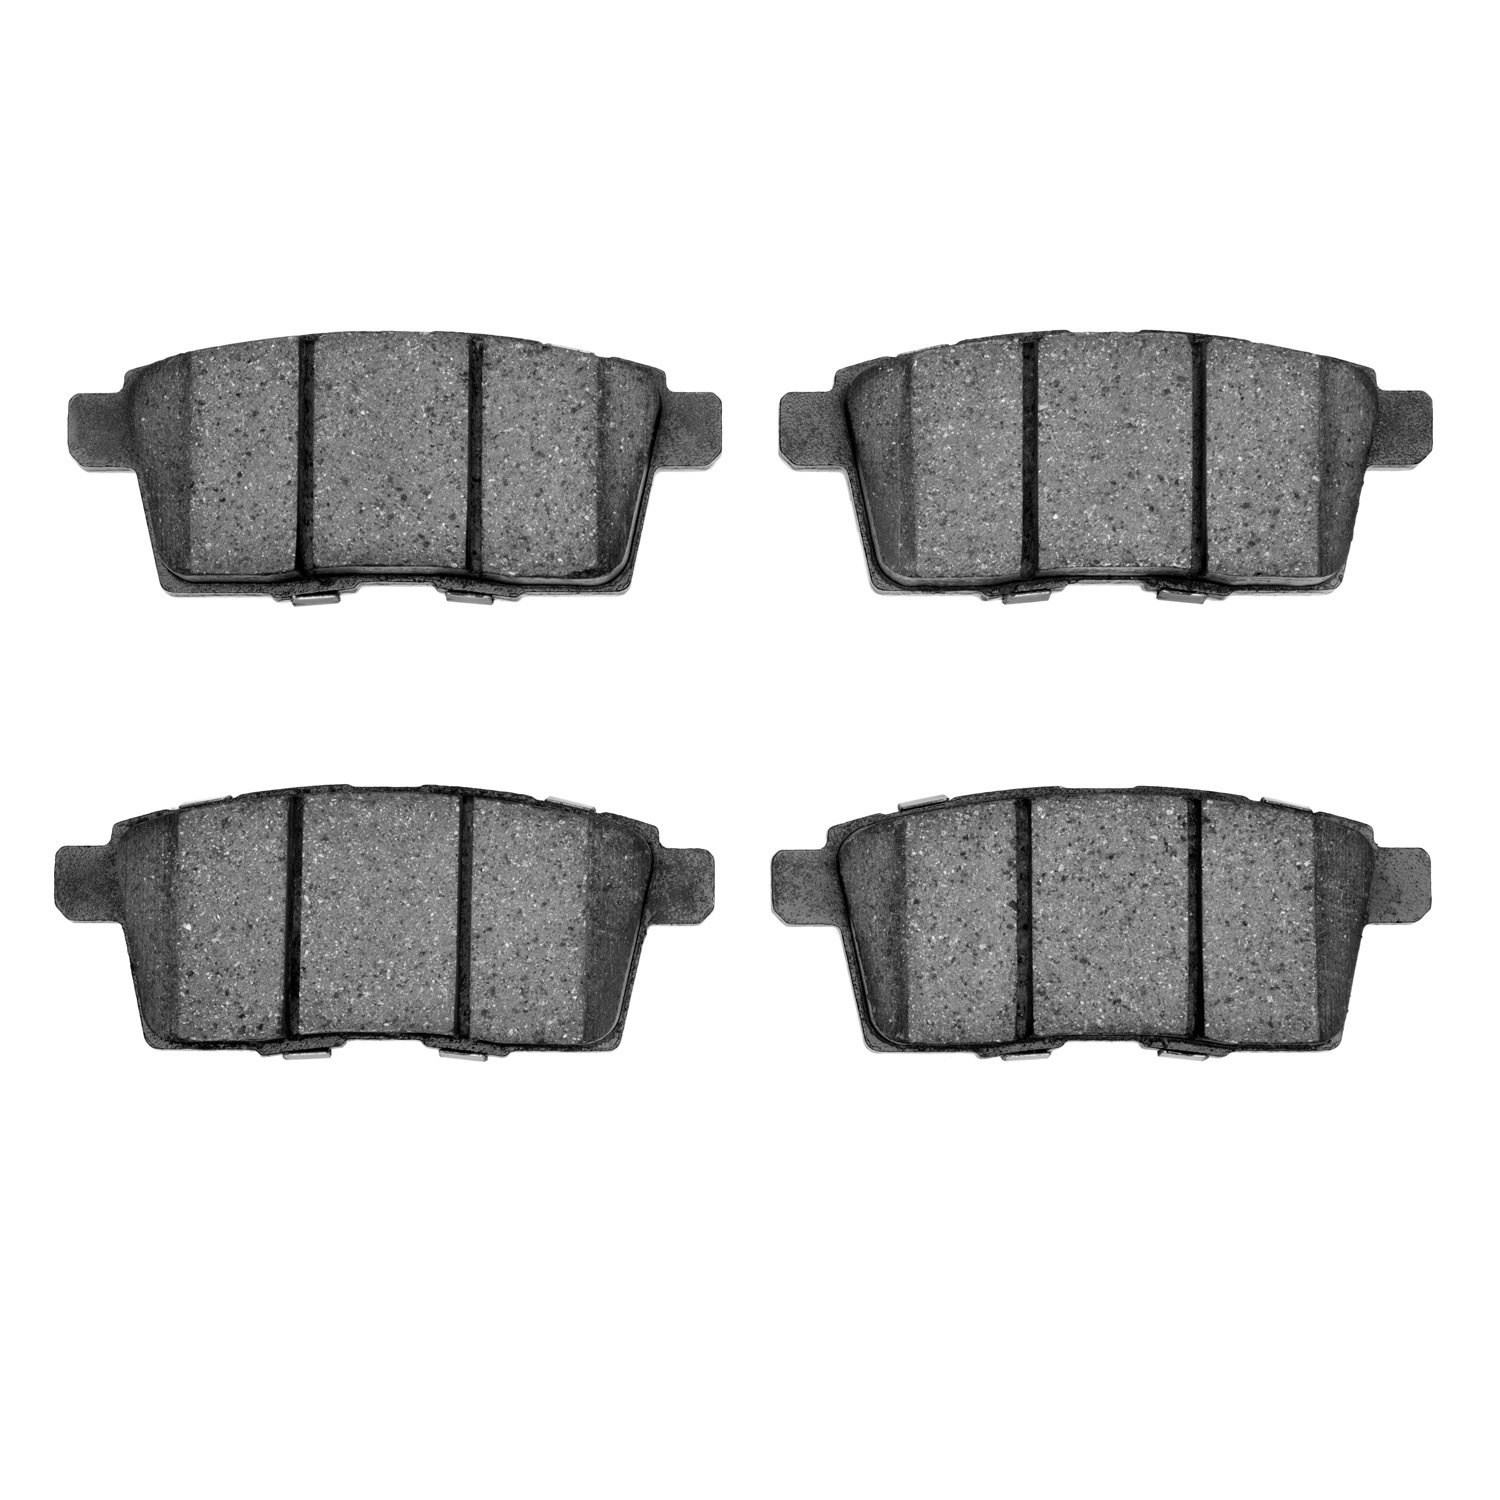 1310-1259-00 3000-Series Ceramic Brake Pads, 2007-2015 Ford/Lincoln/Mercury/Mazda, Position: Rear